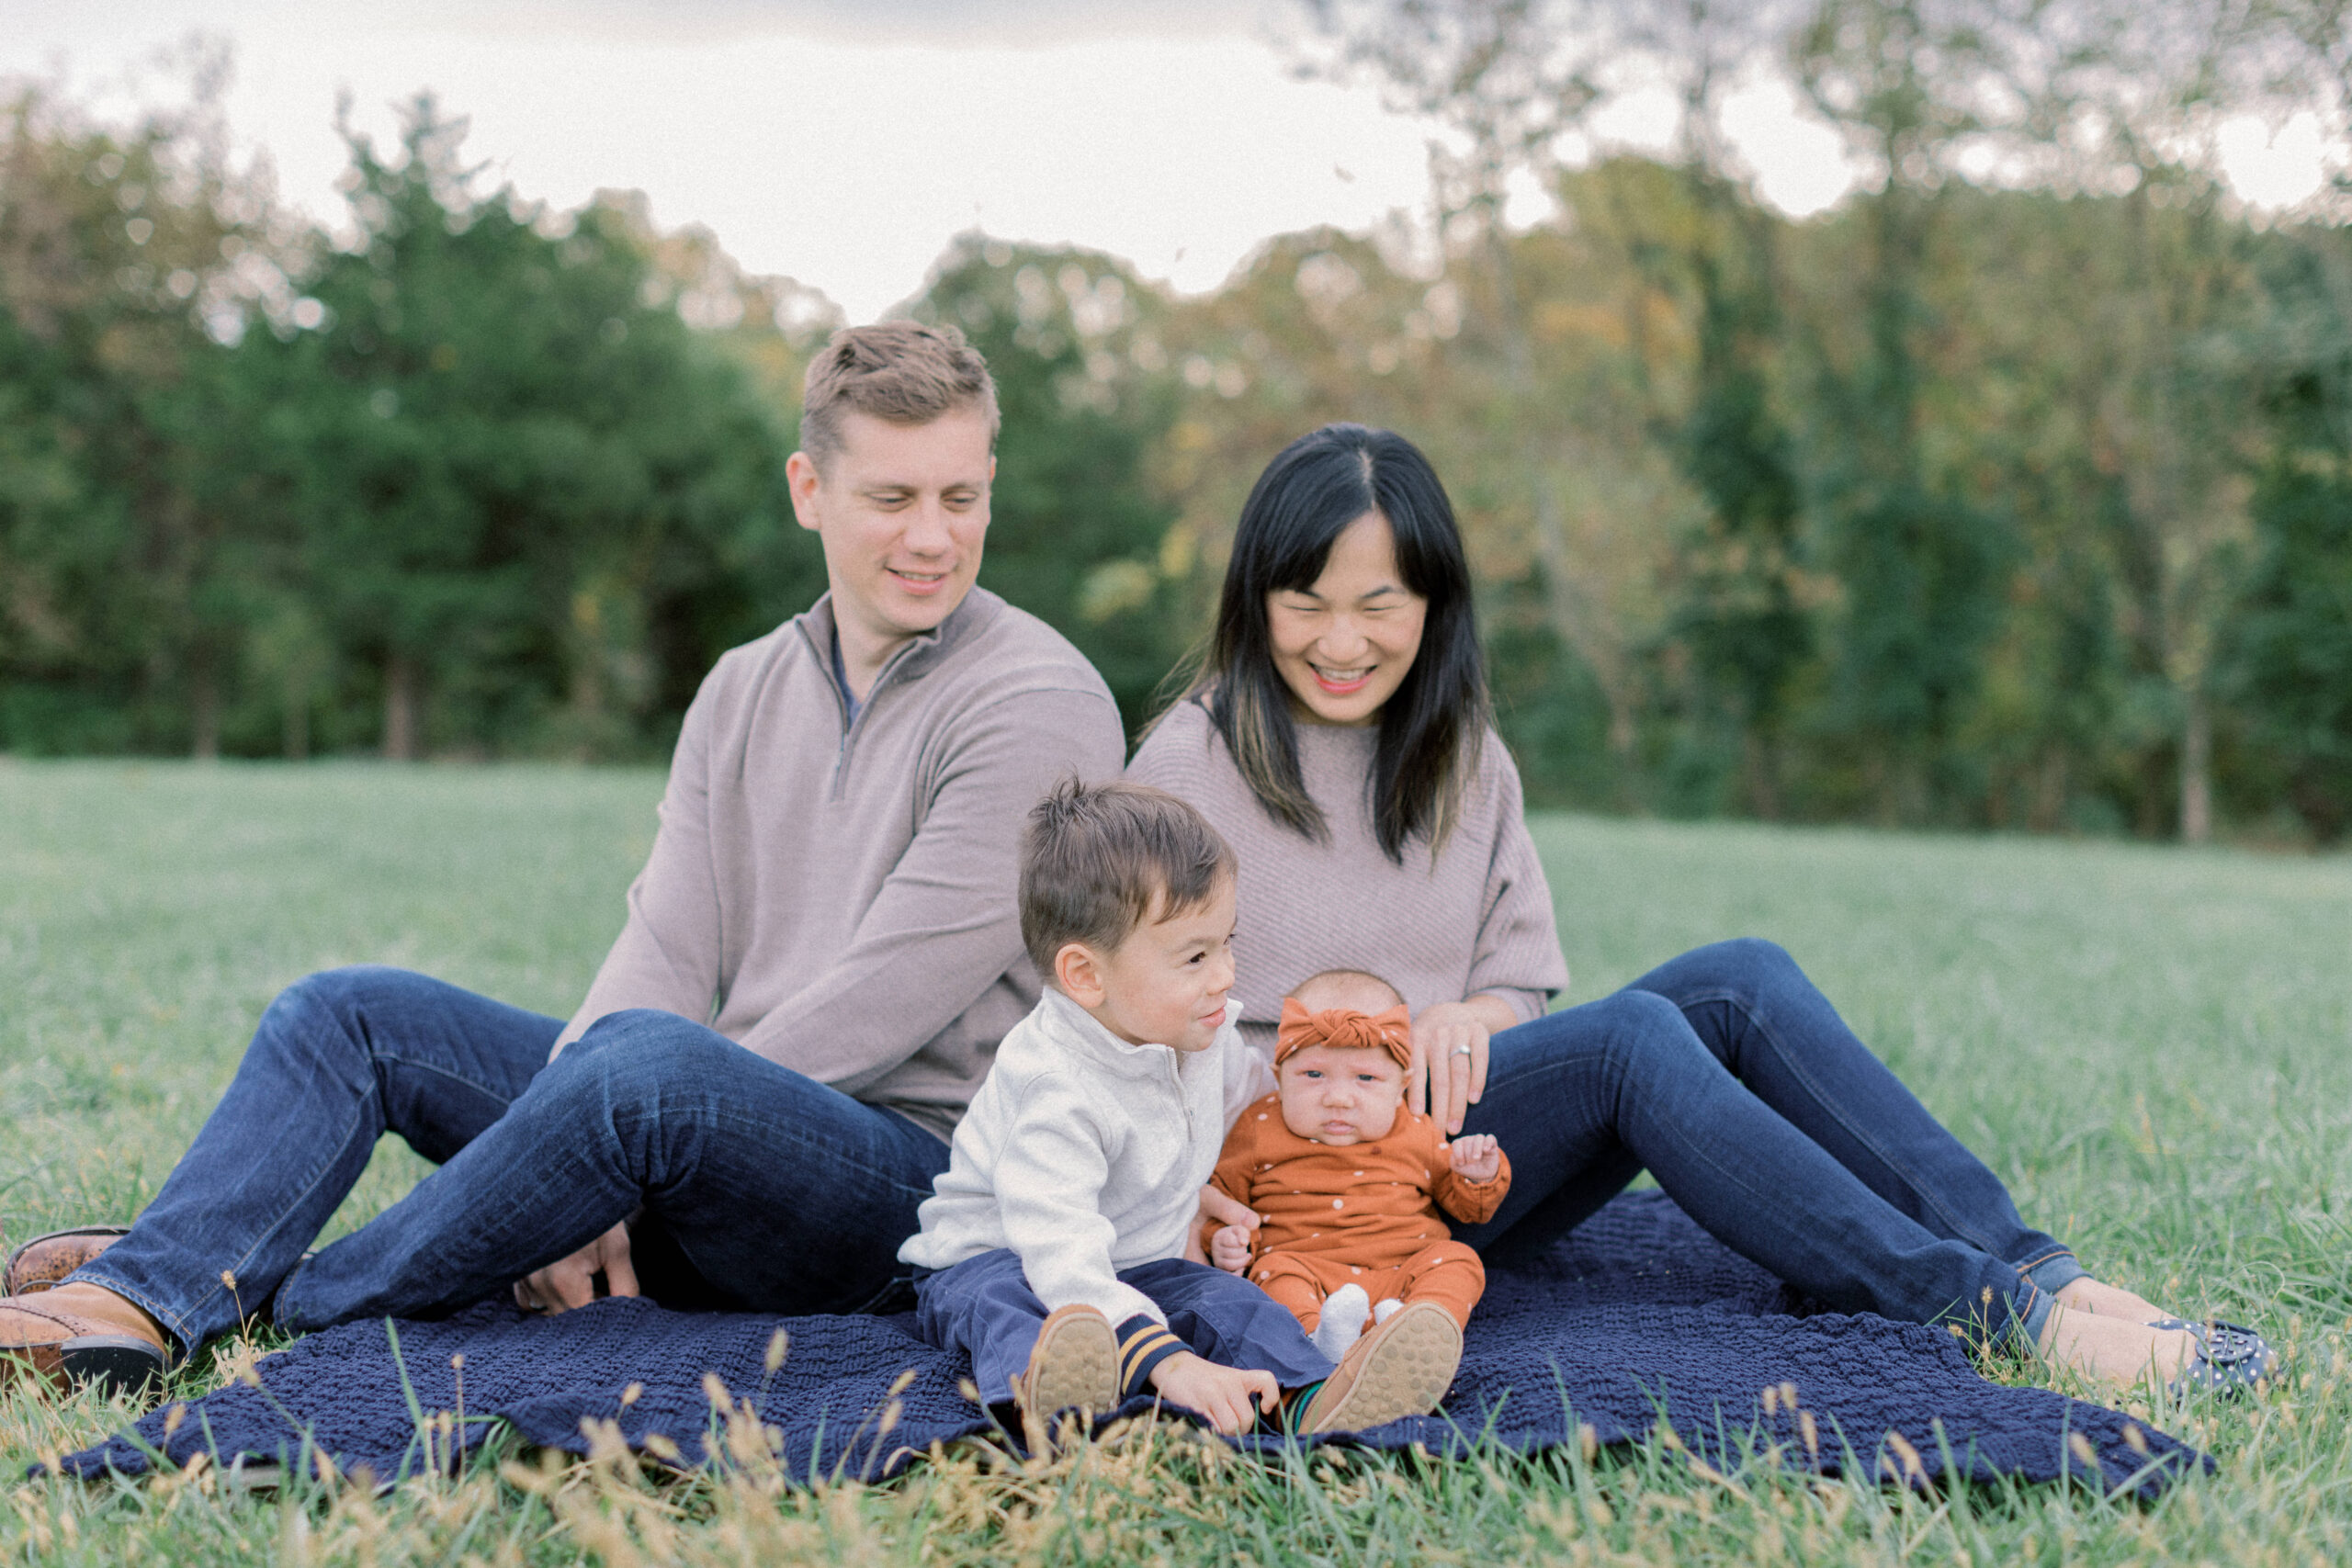 Maryland photographer captures family sitting together on picnic blanket